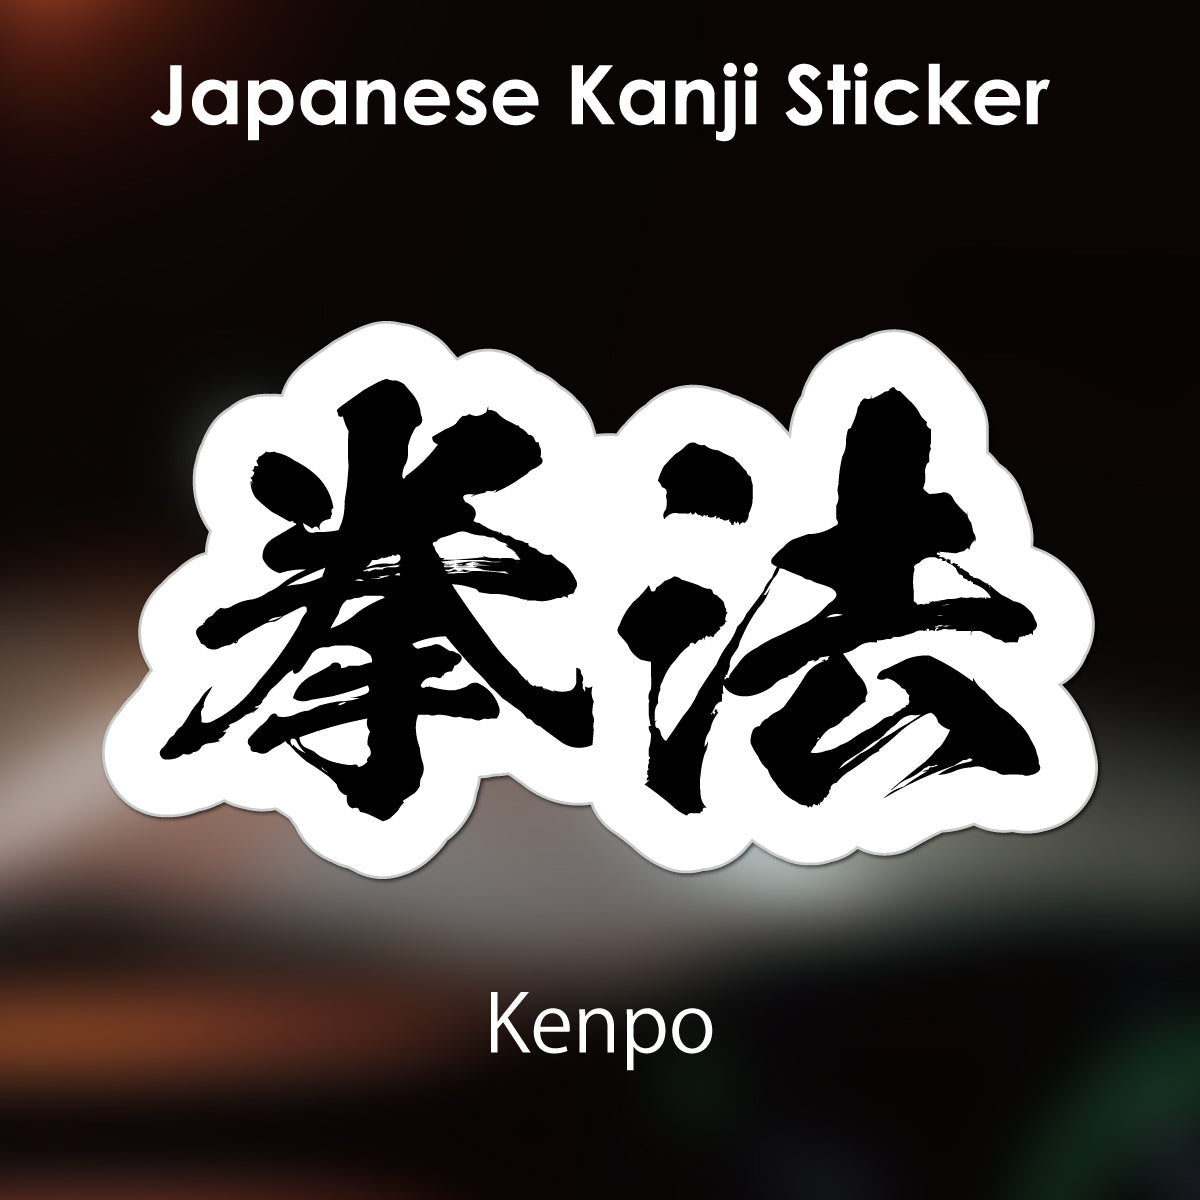 Japanese Kanji Sticker "Kenpo" outlined shape PVC 10.6x6cm original design from Japan Retro